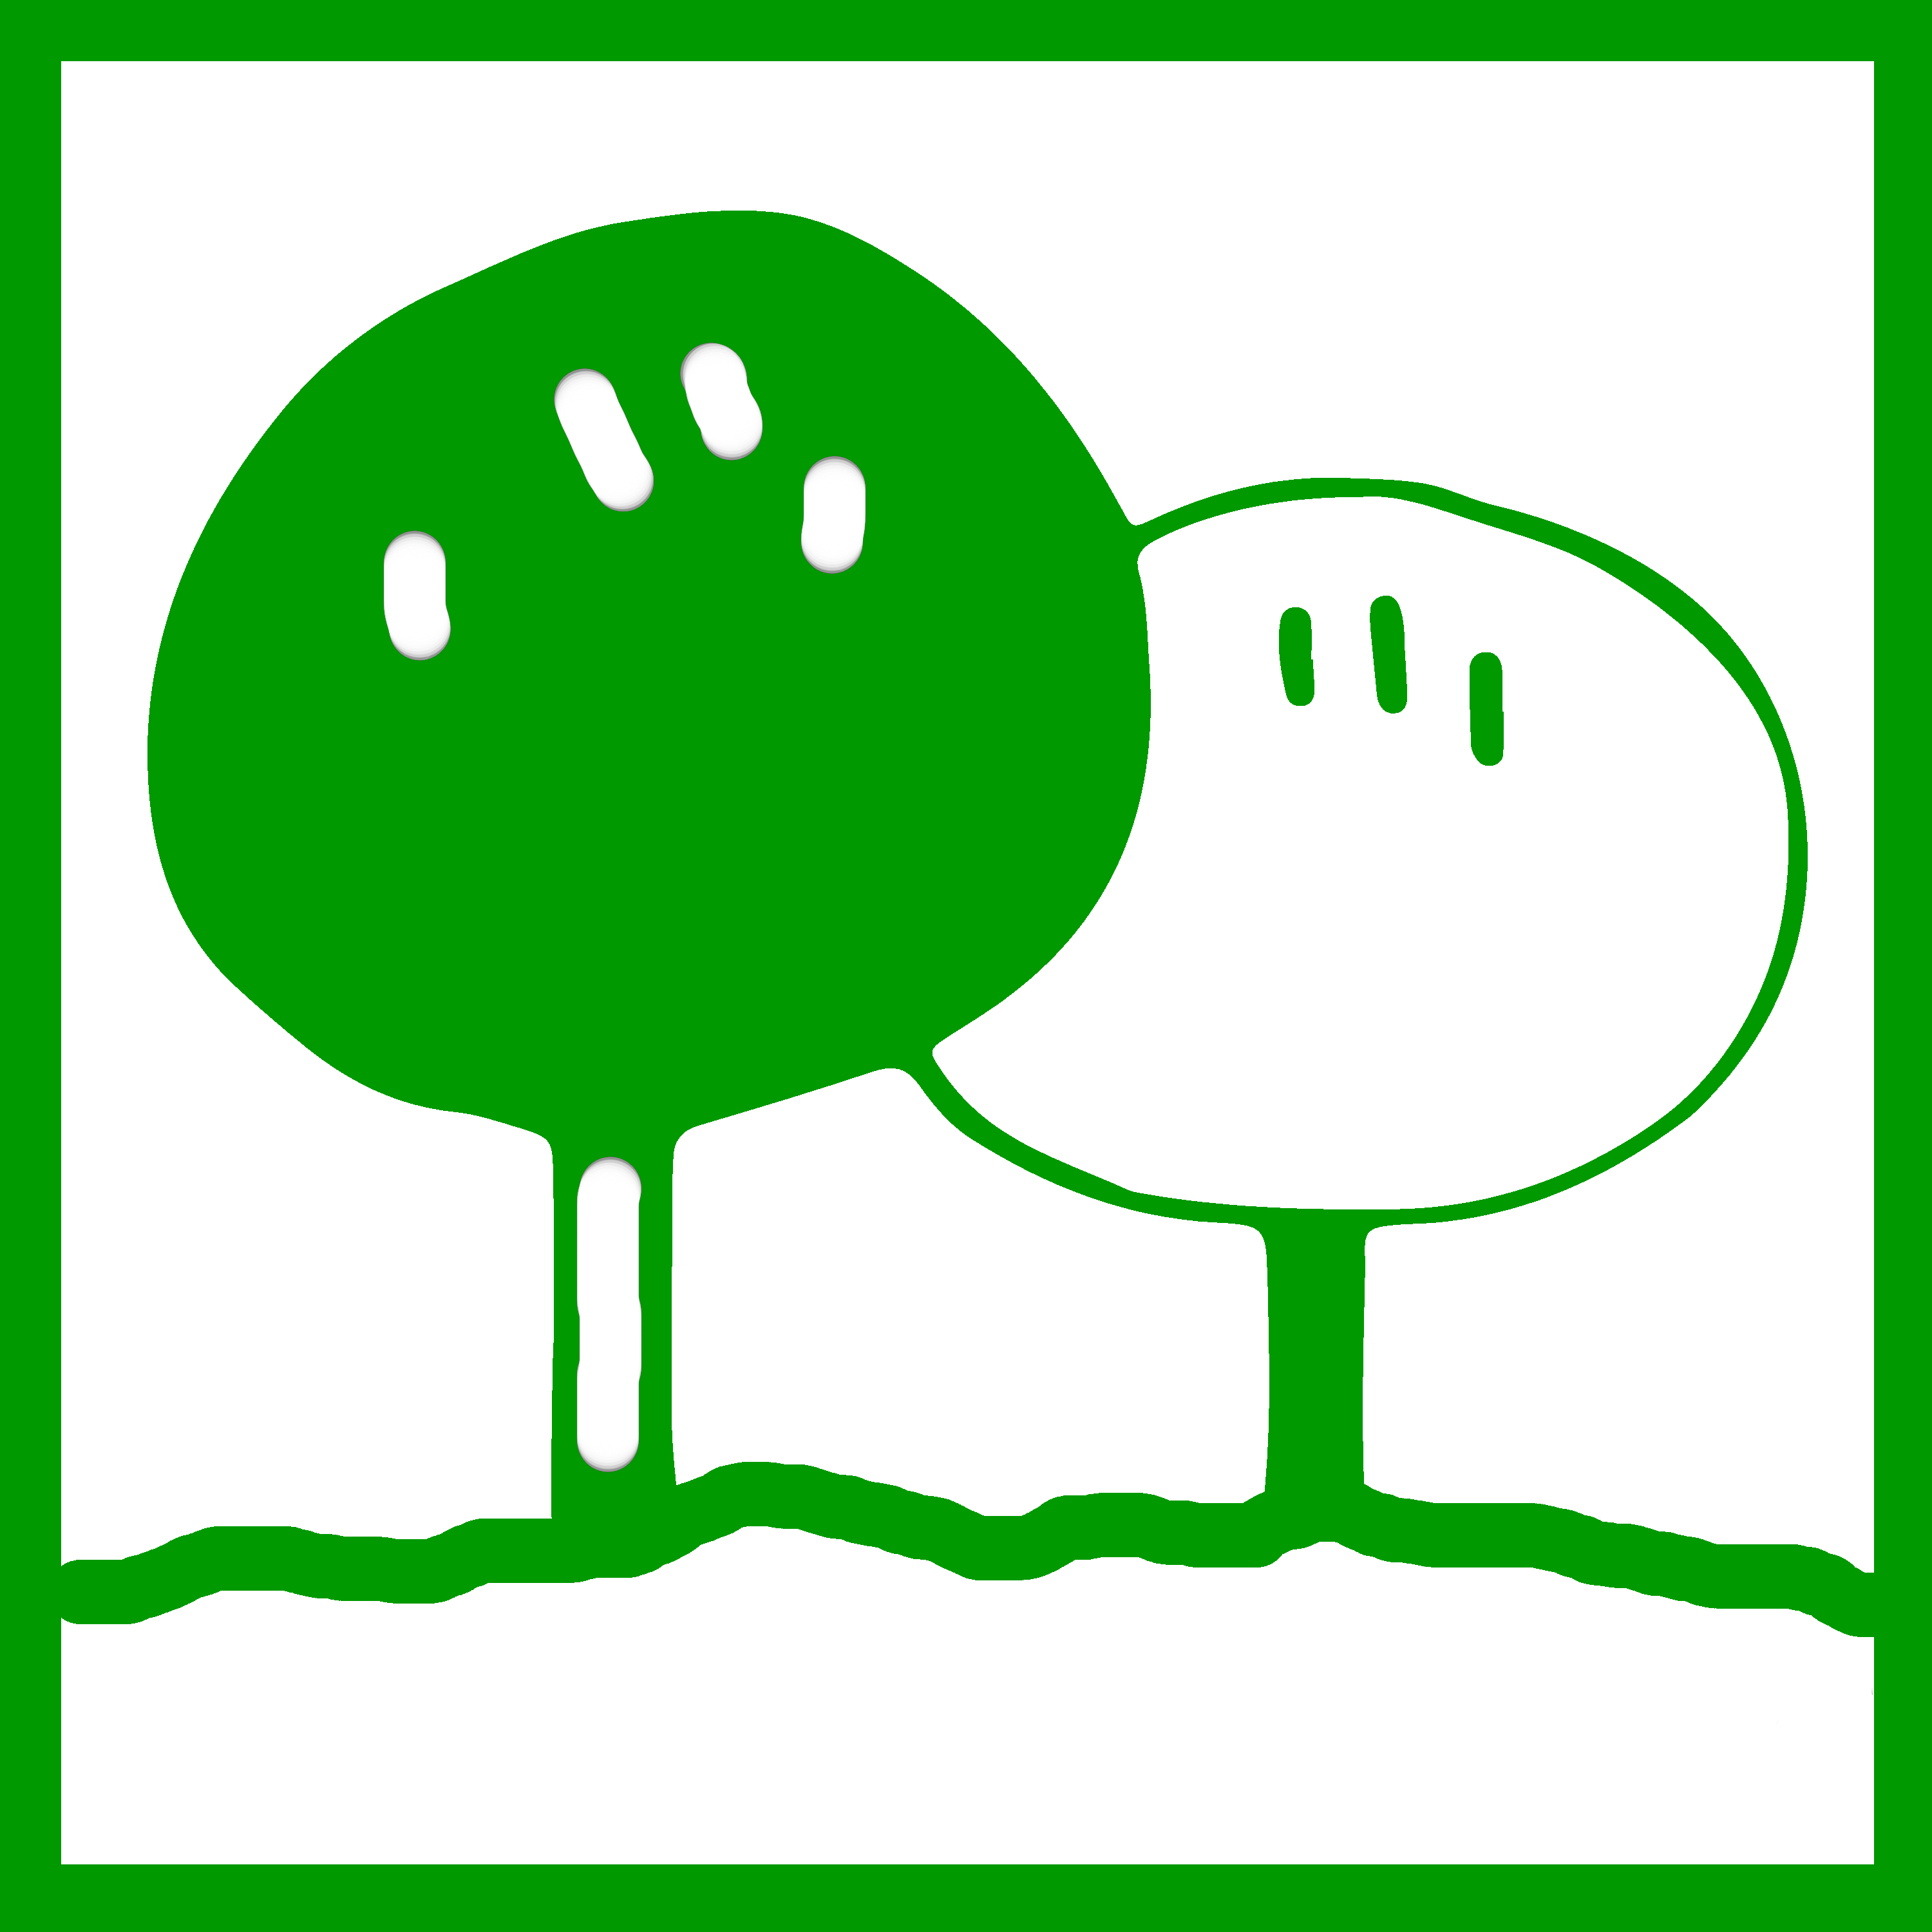 Chosen tree management icon